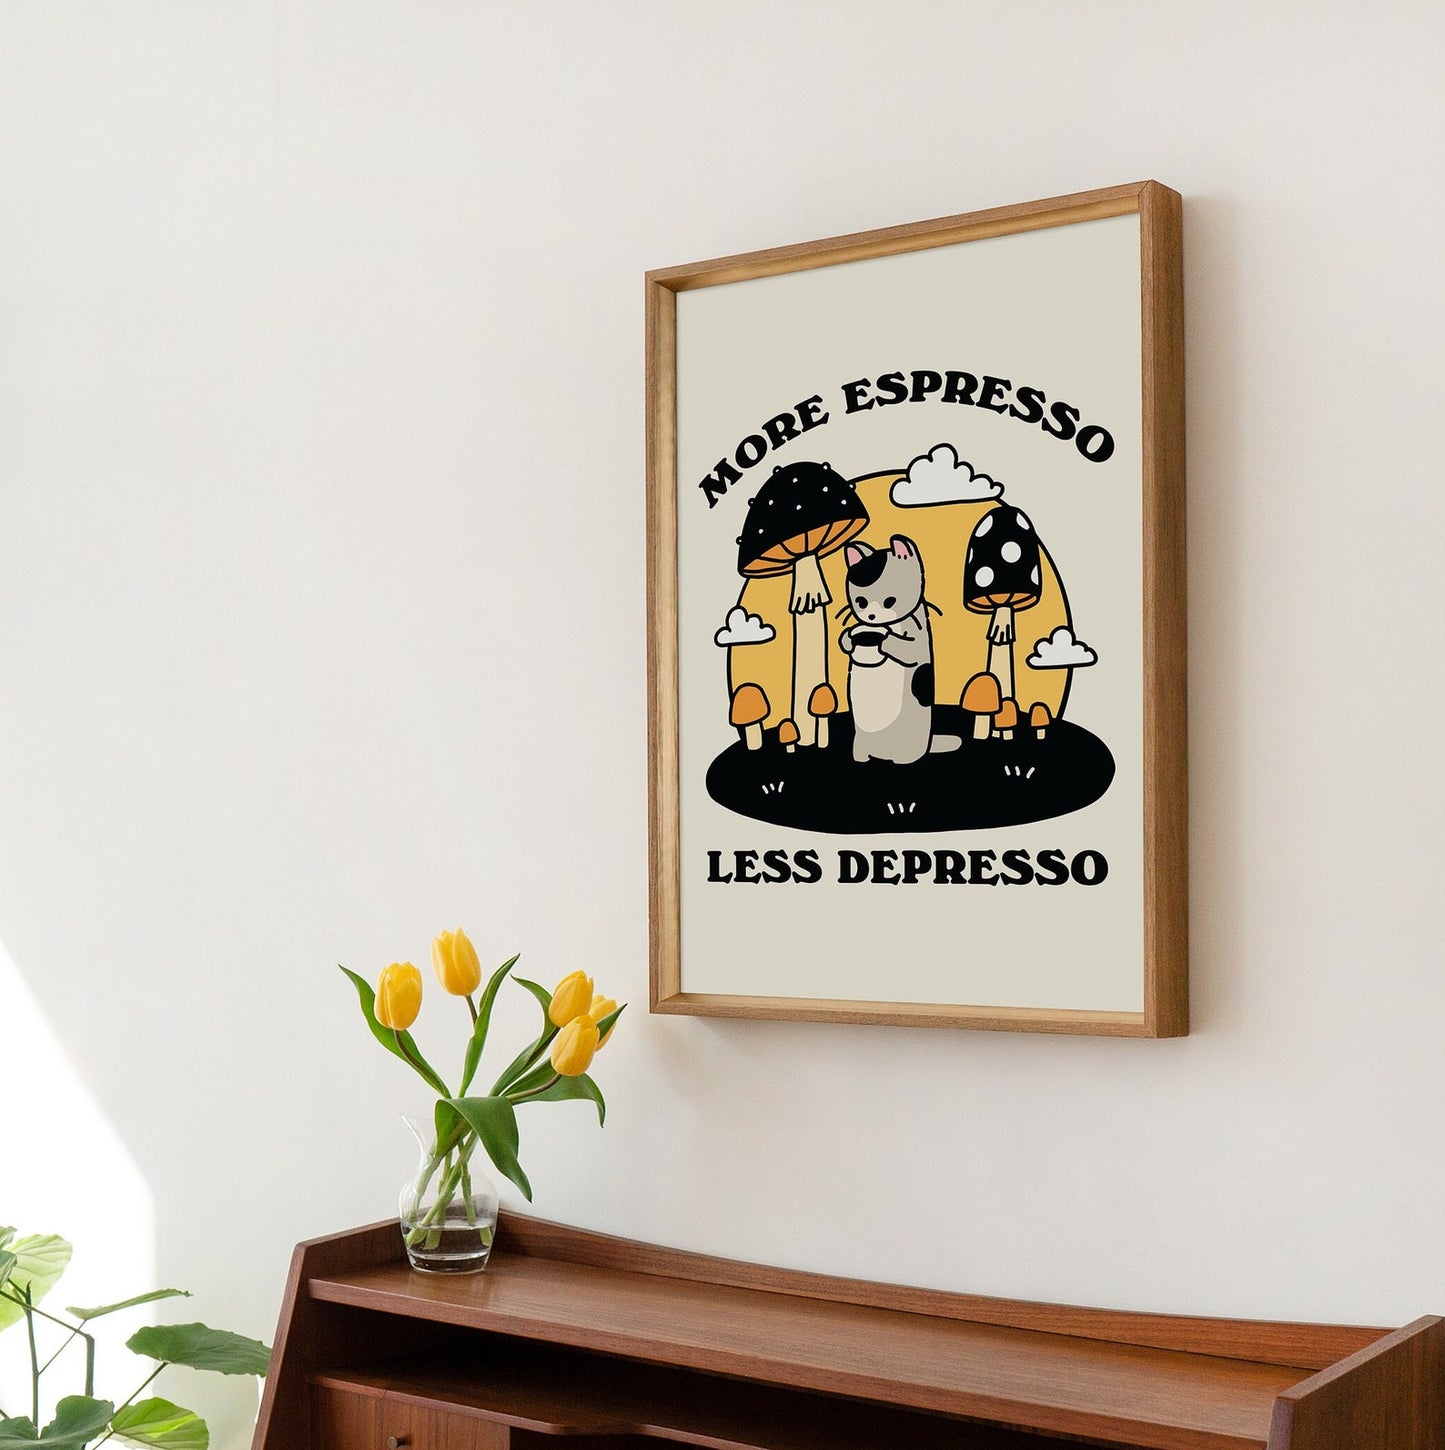 'More Espresso Less Depresso' Cat Print